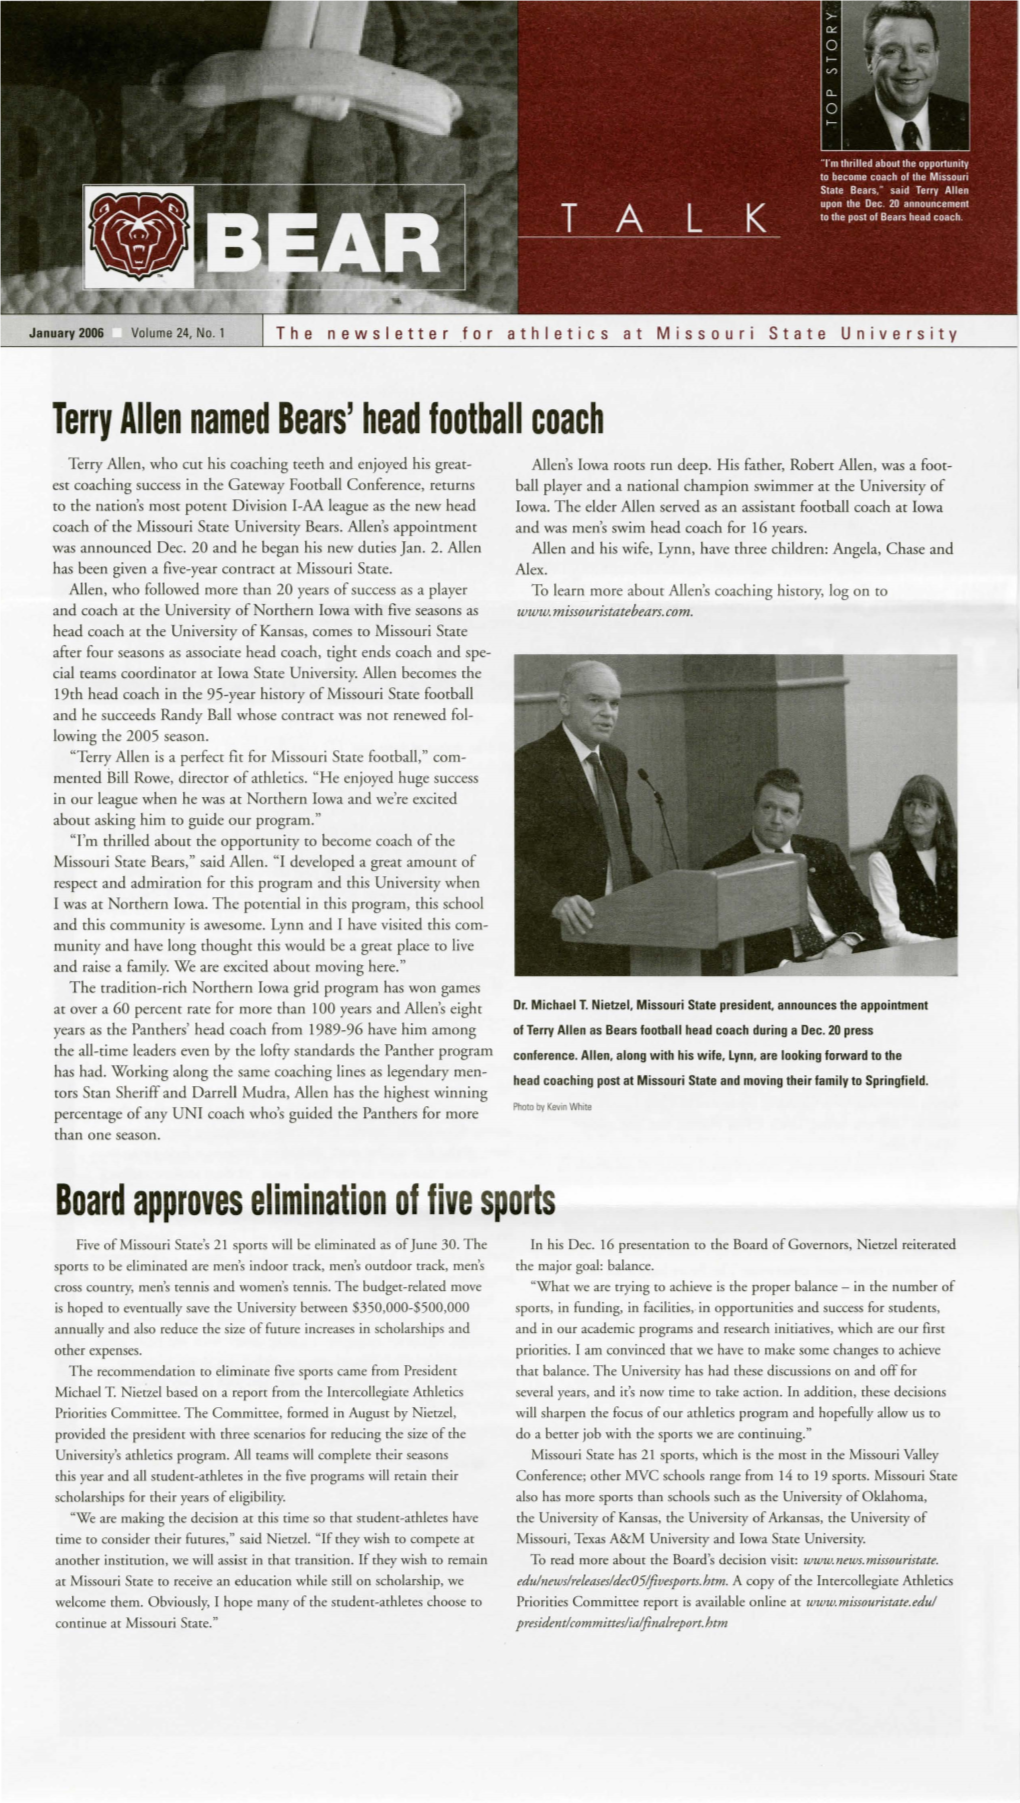 Terry Allen Named Bears' Head Football Coach Board Approves